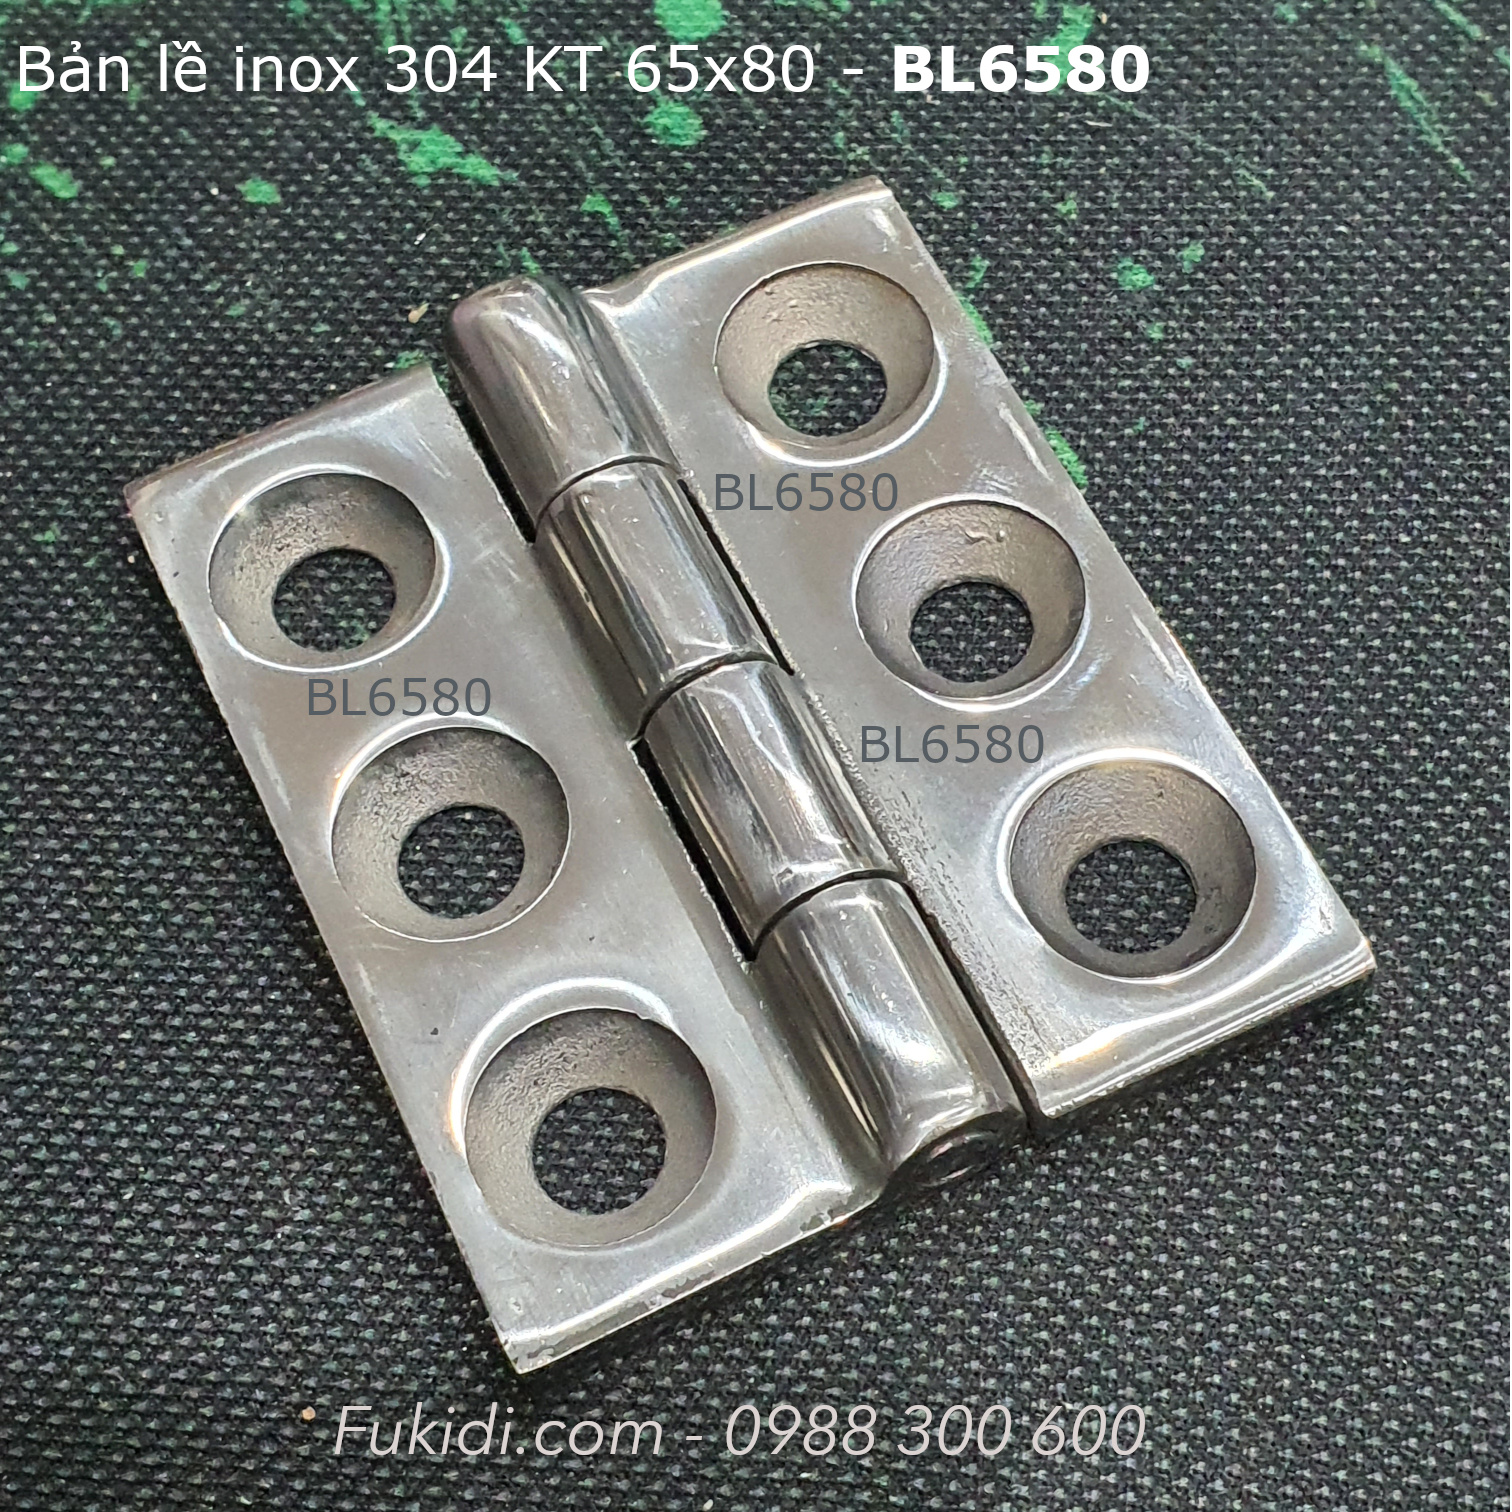 Bản lề inox 304, KT 65x80, dày 6mm - BL6580